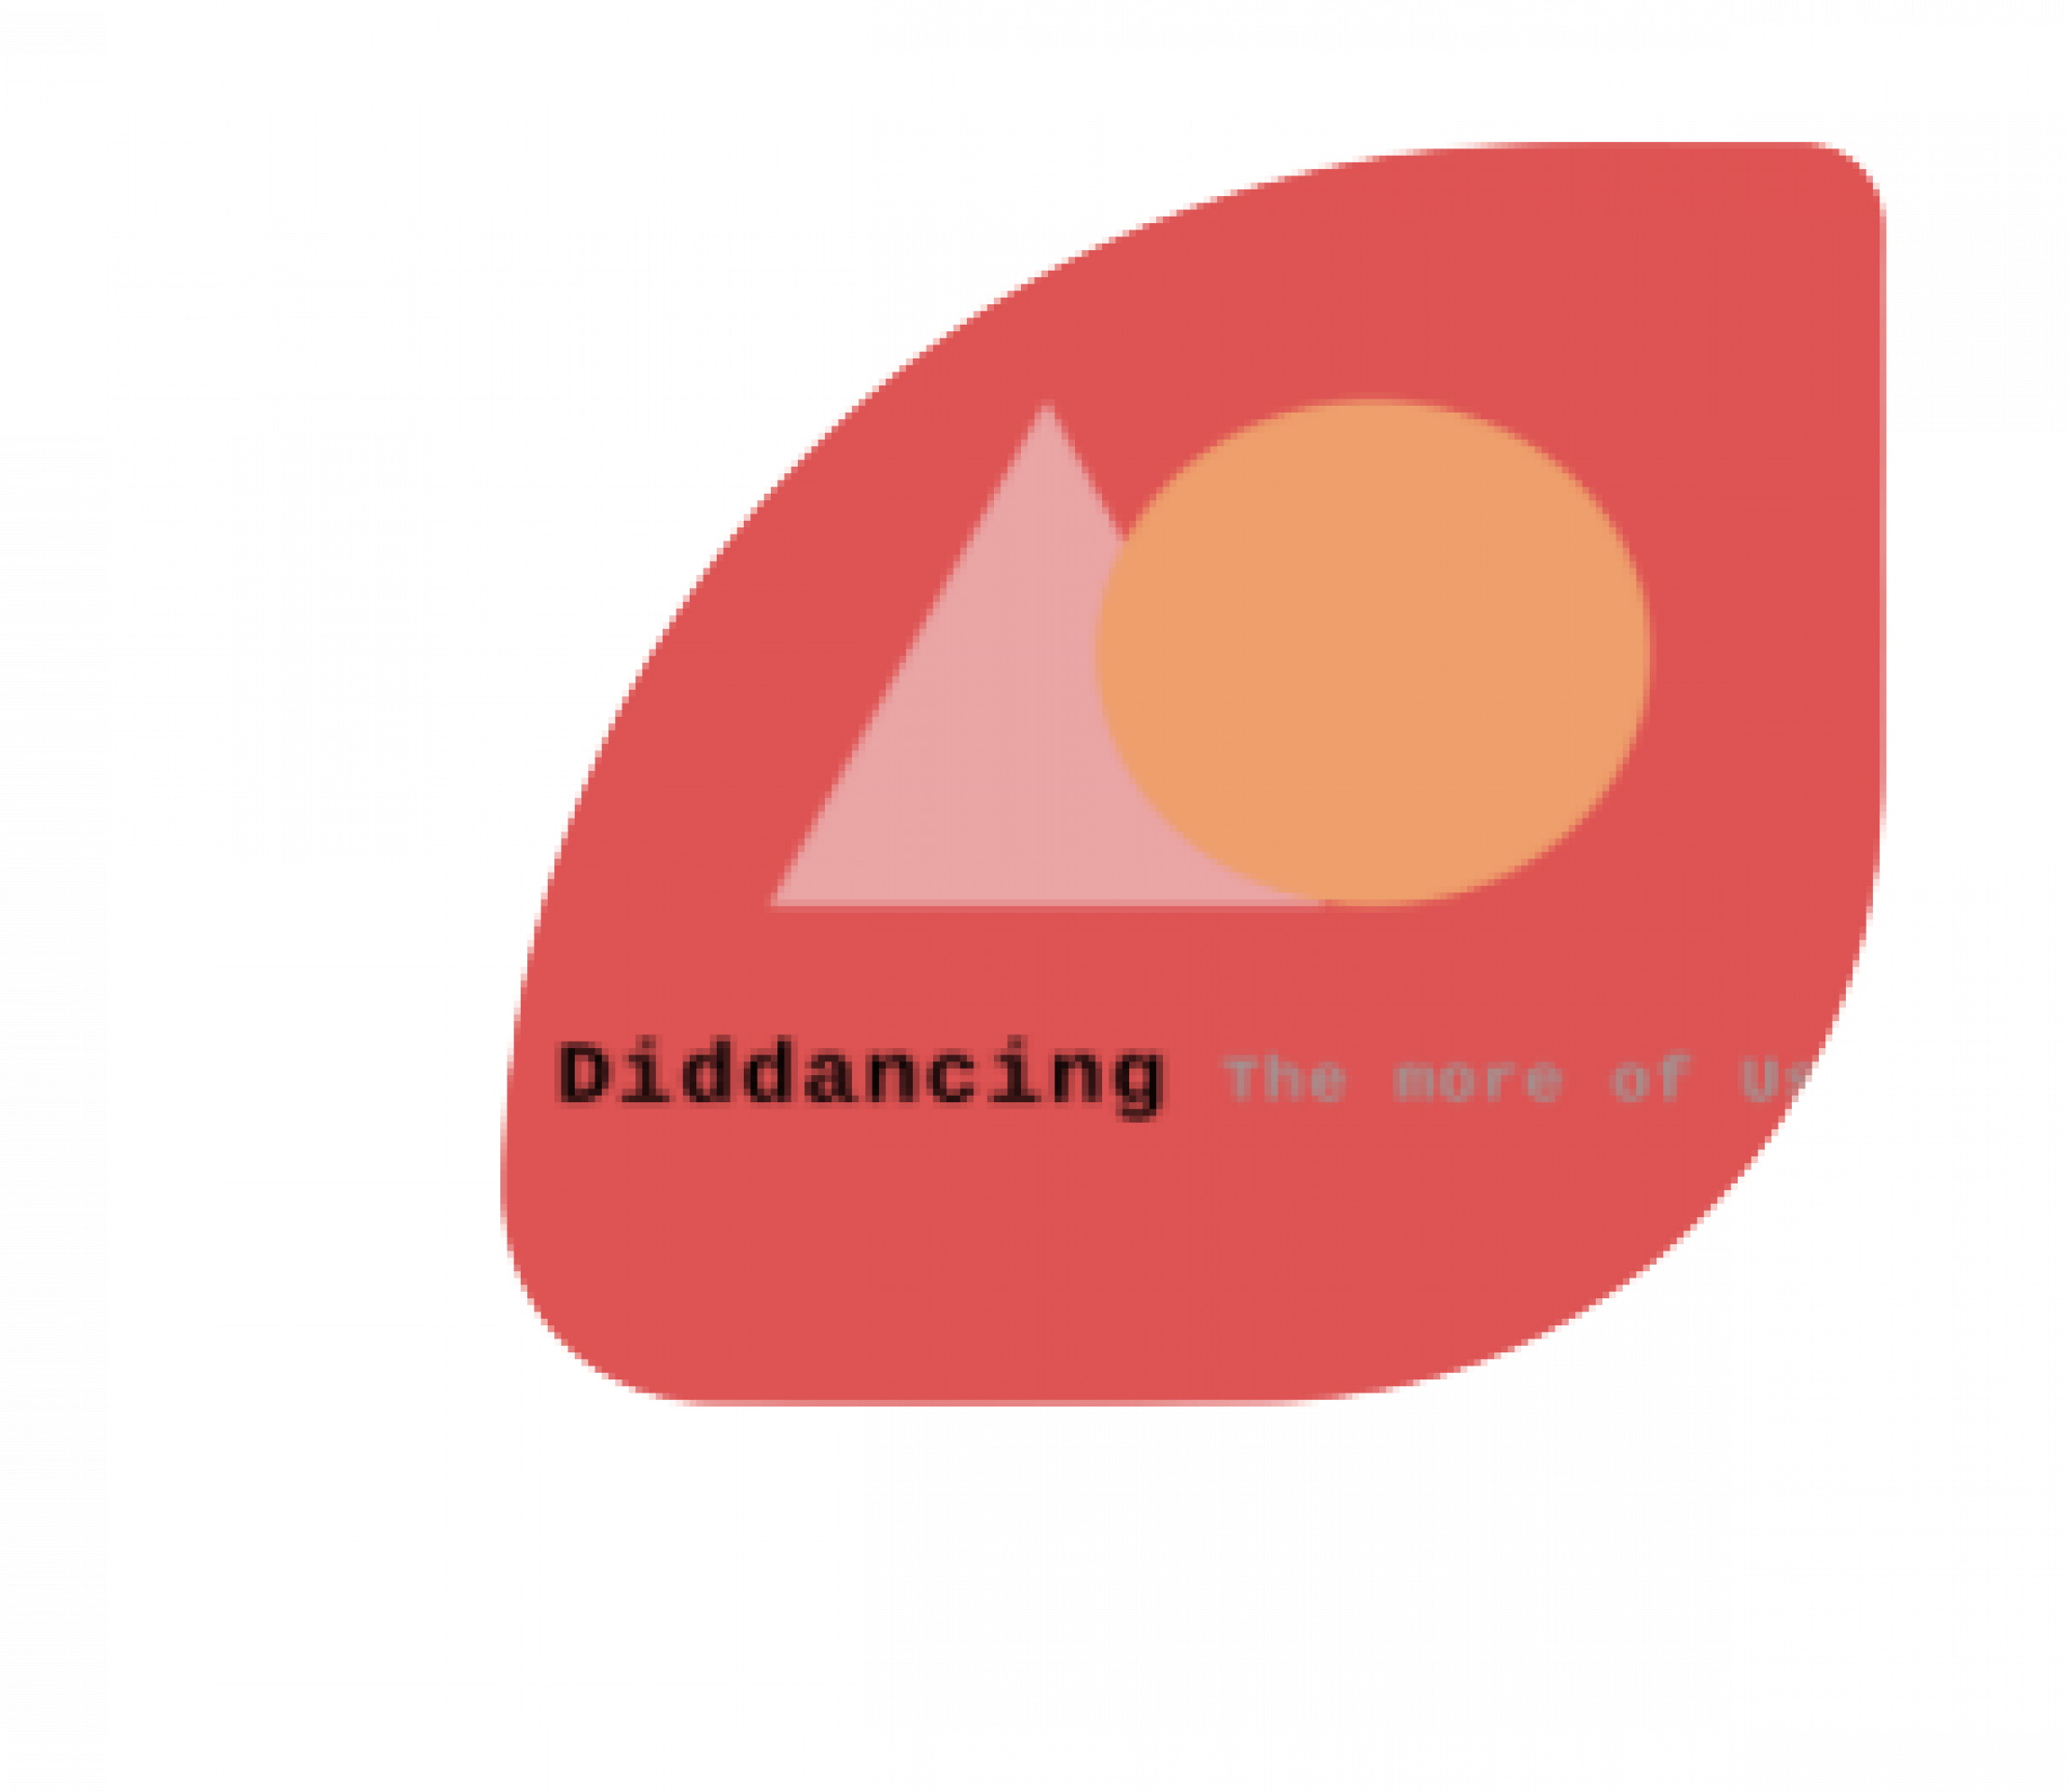 Diddancing 